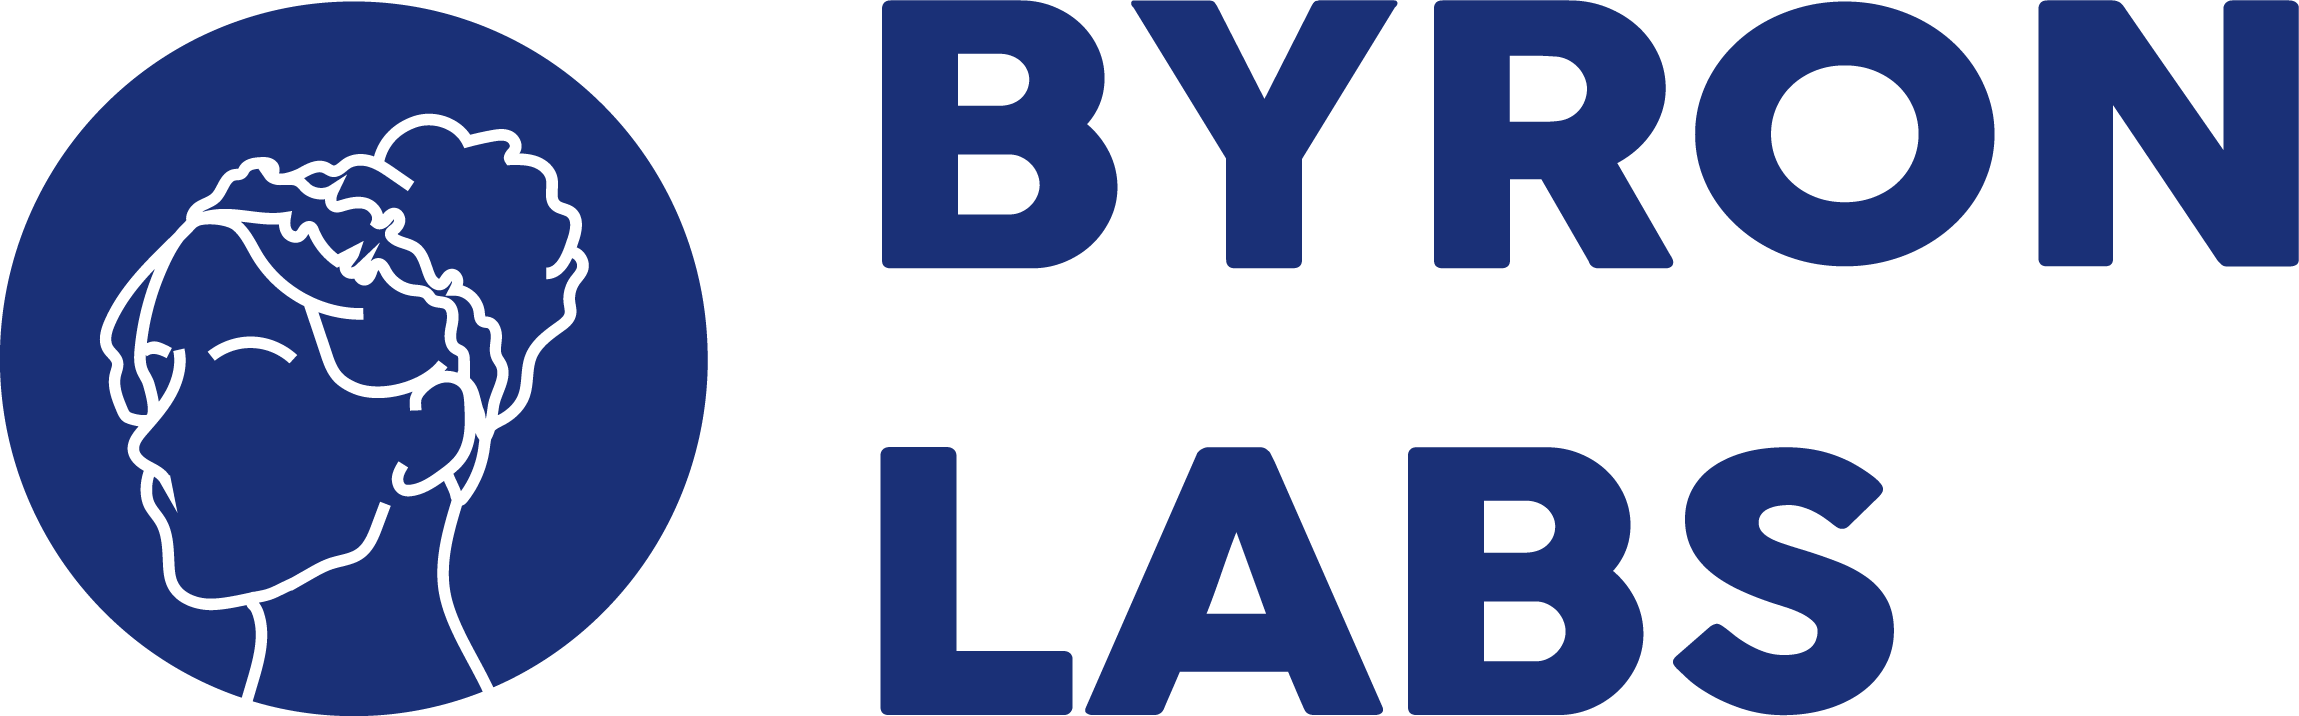 Byron Labs